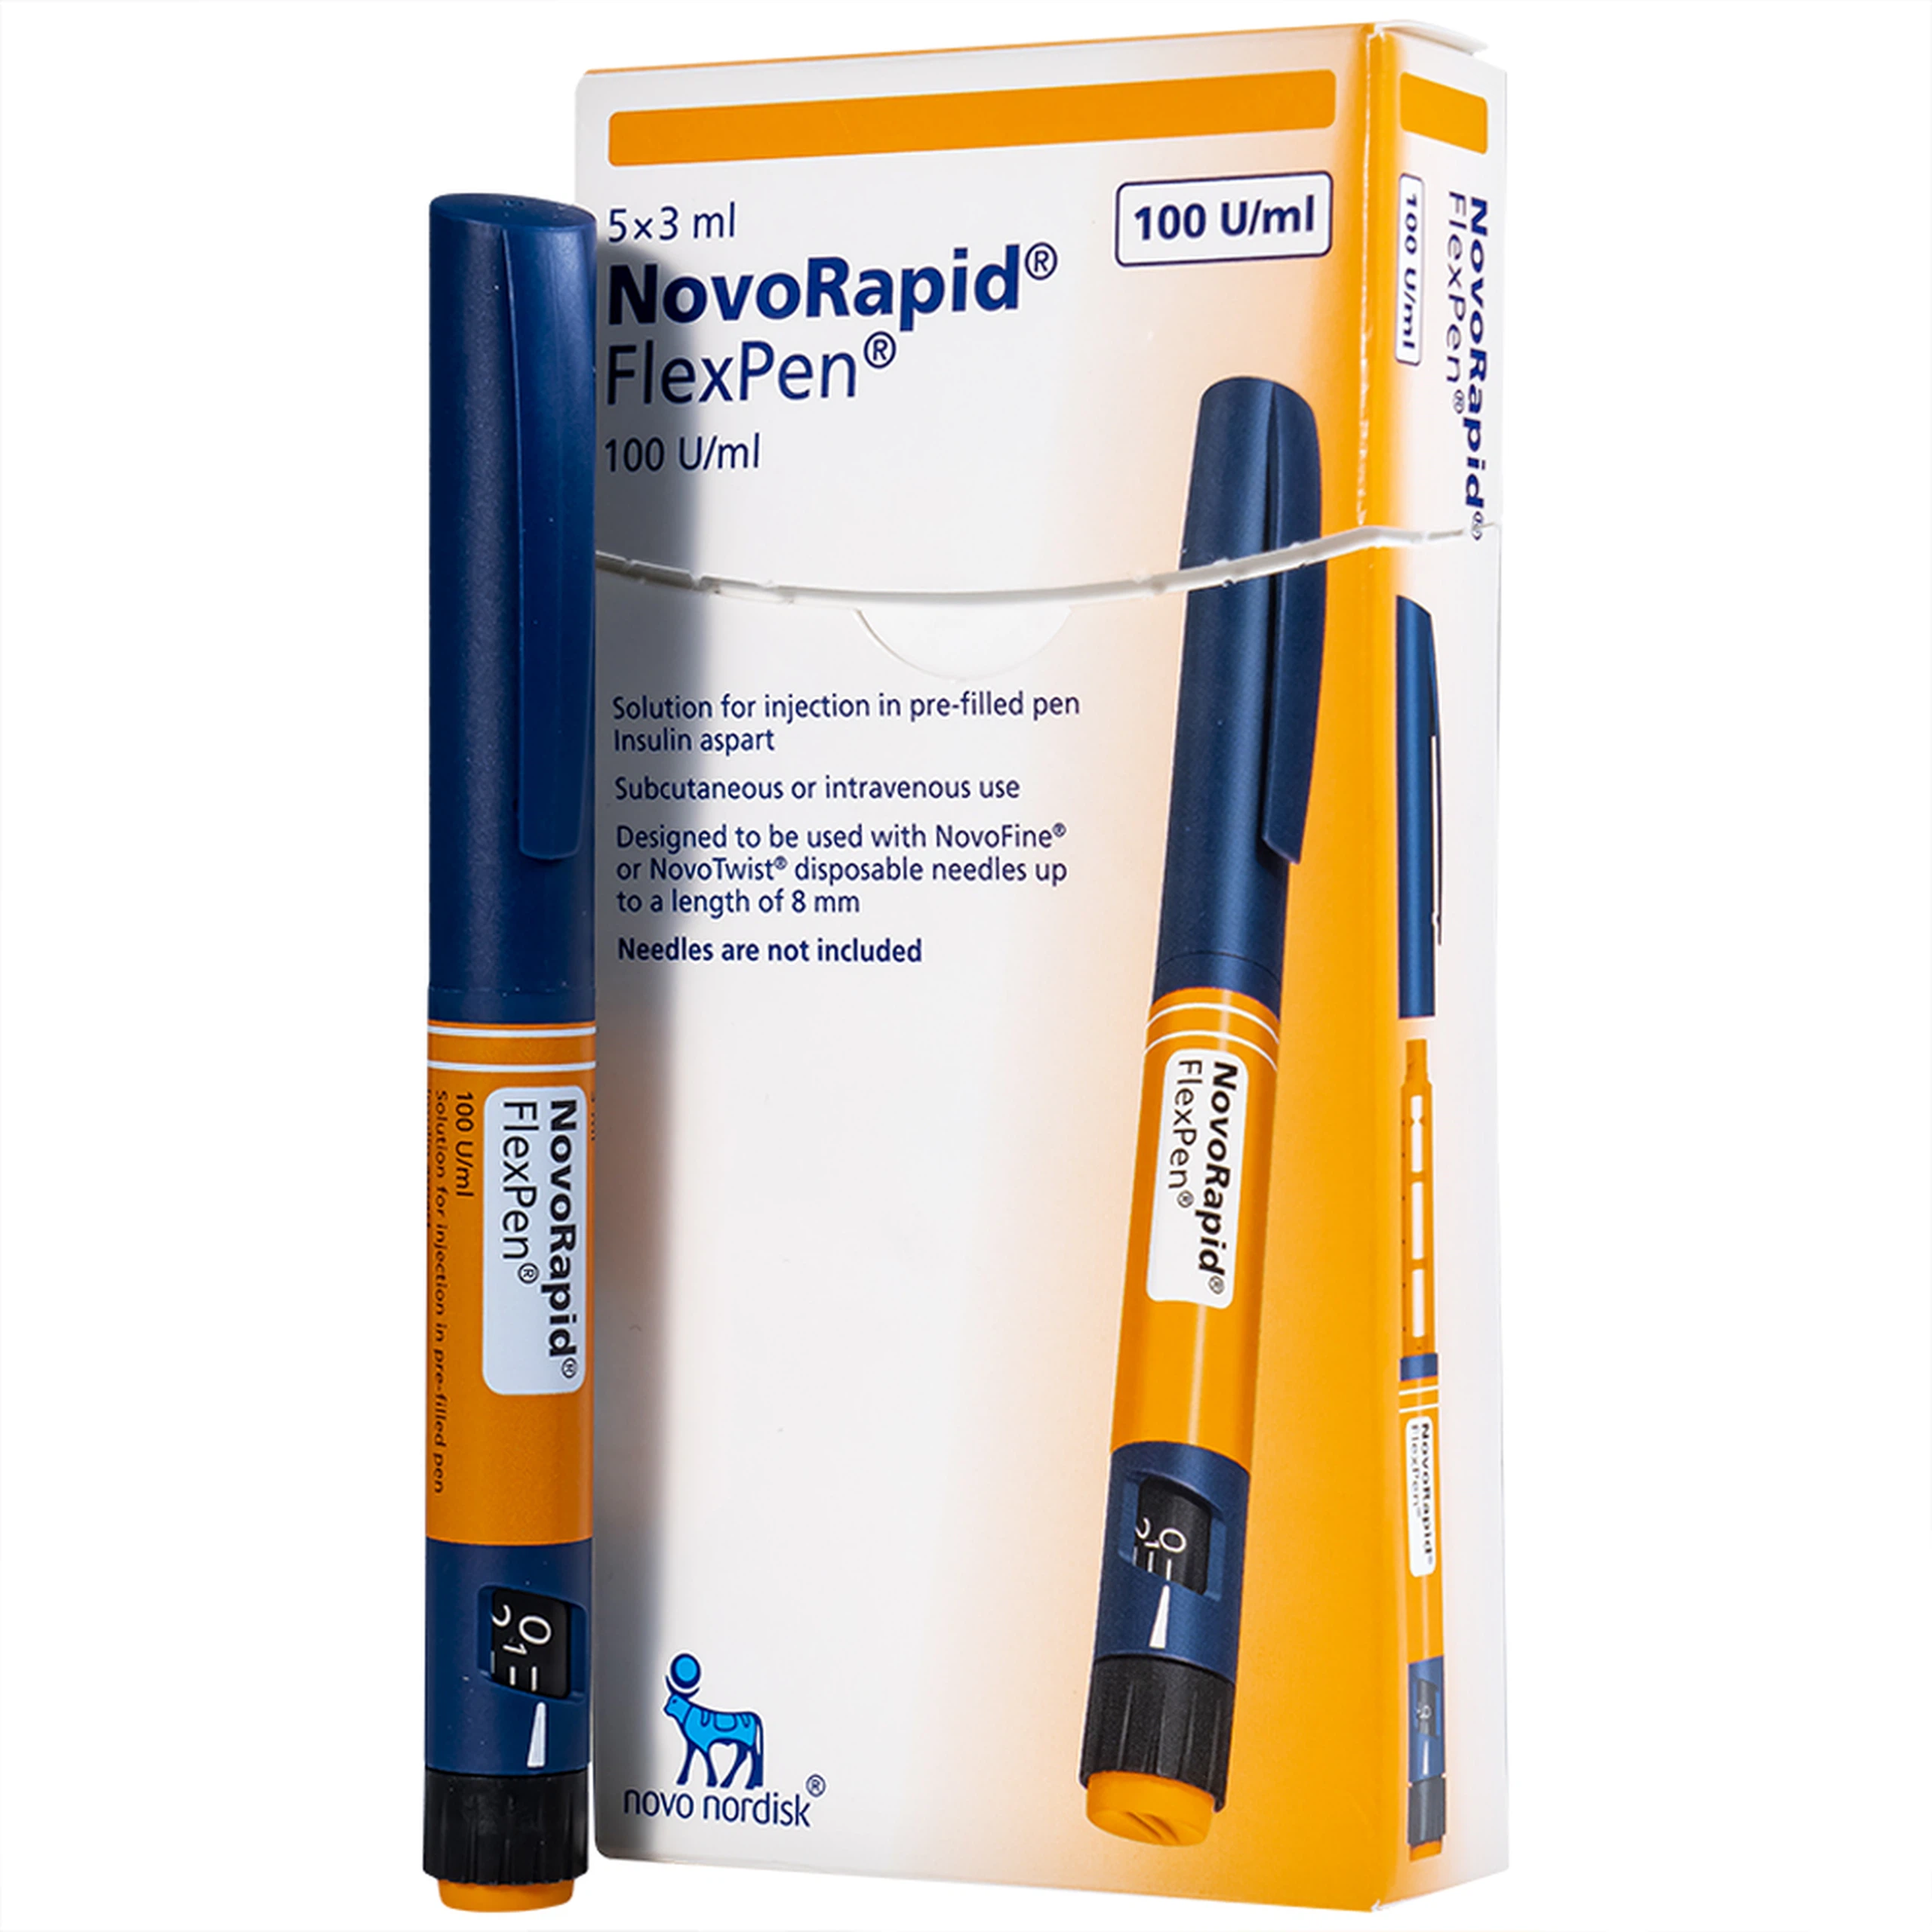 Bút tiêm Novorapid FlexPen 100U/ml Novo Nordisk kiểm soát đường huyết (5 cây x 3ml)